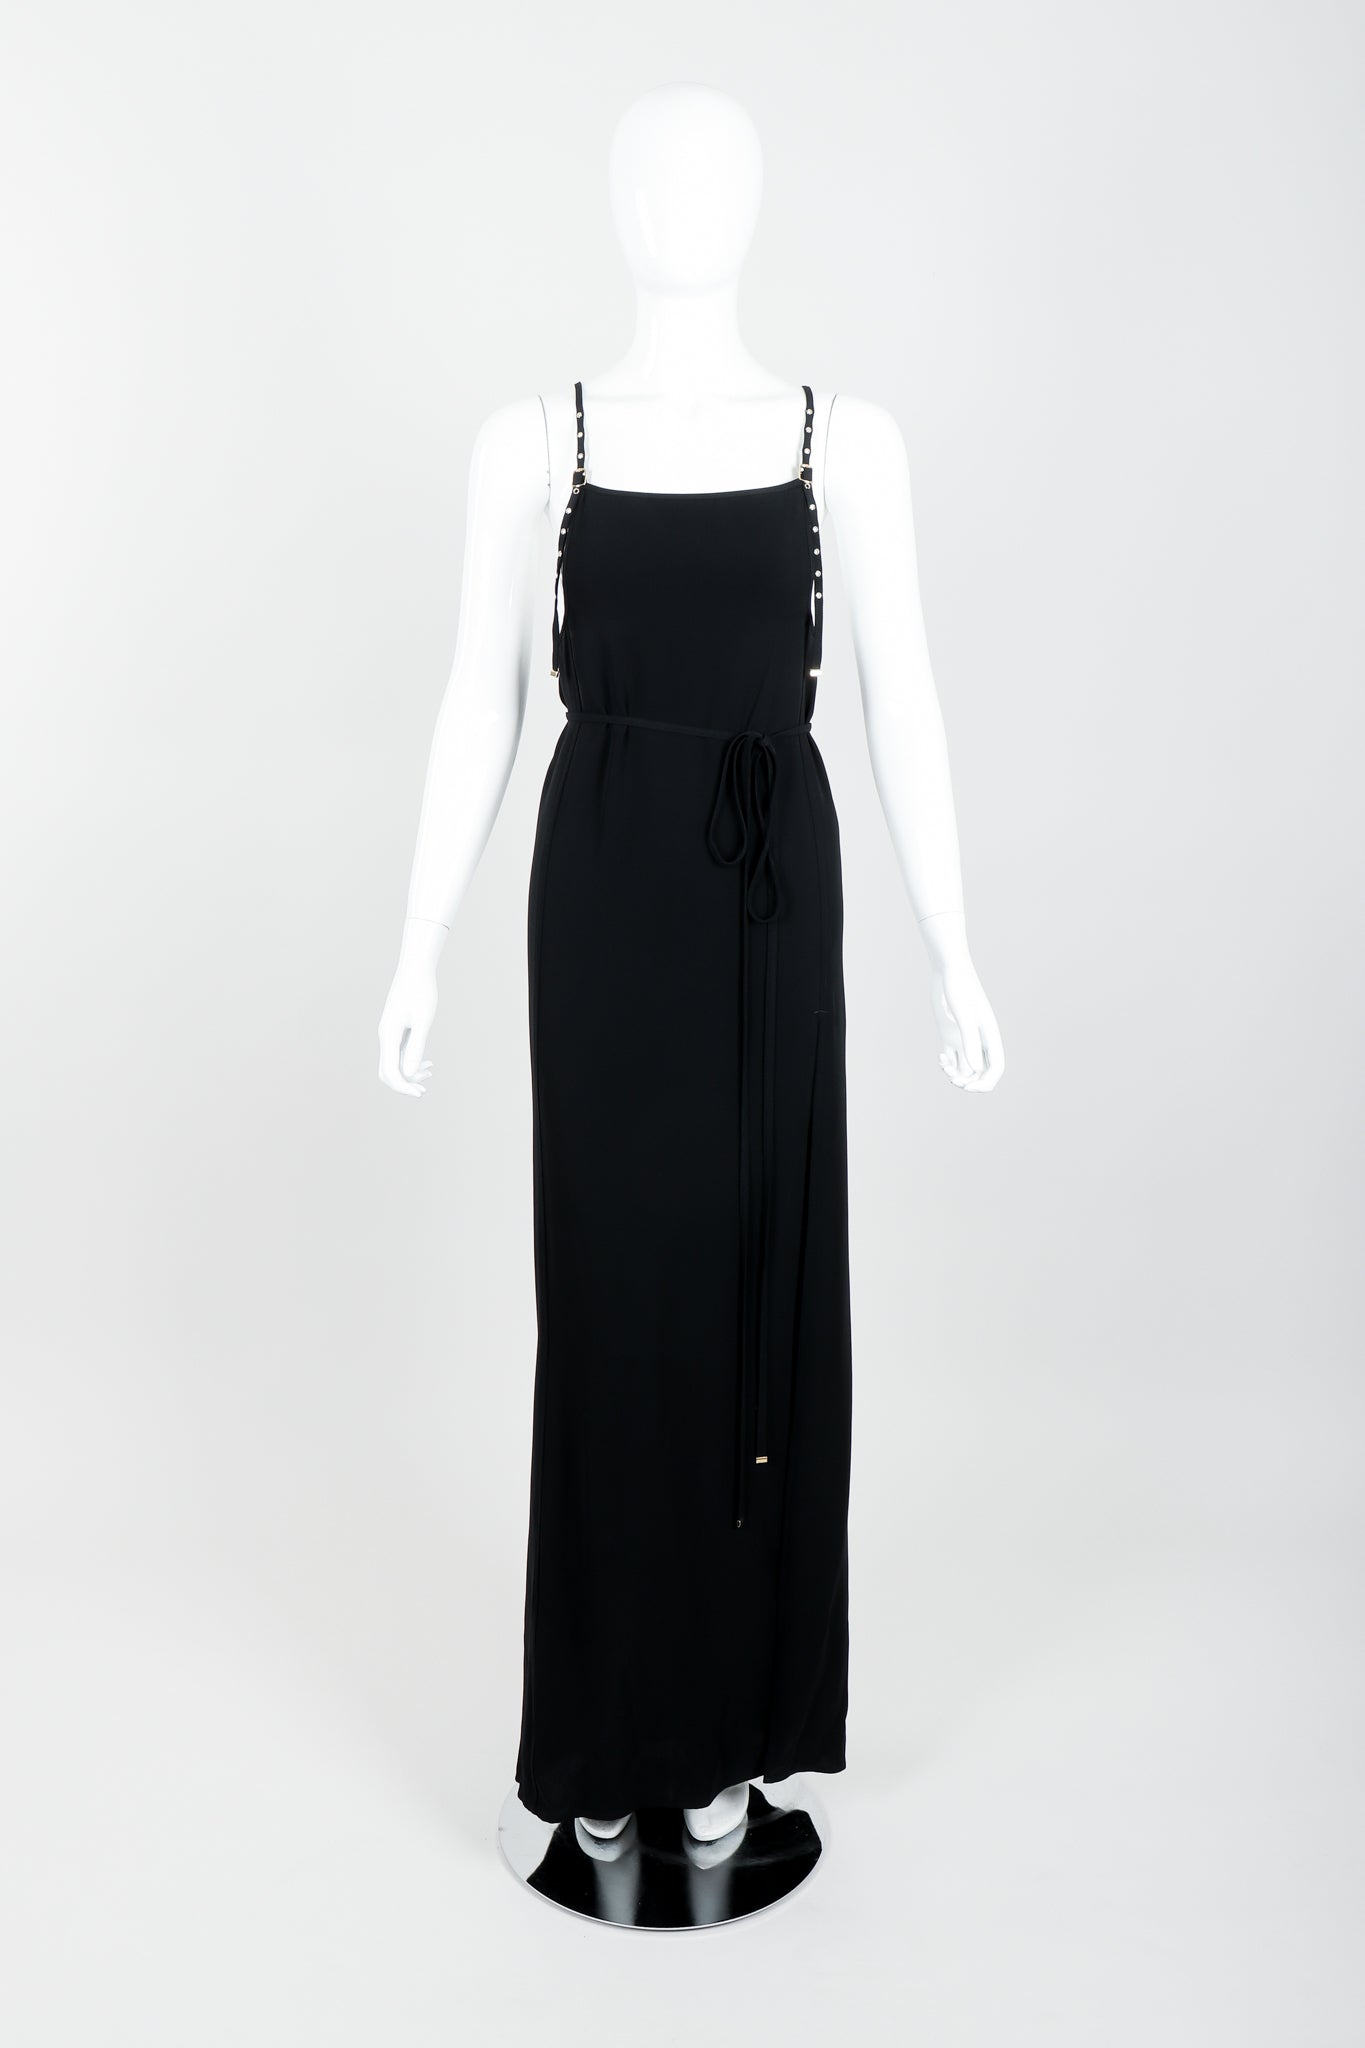 Vintage Jean Paul Gaultier Crepe Grommet Strap Gown w/ High Slit on Mannequin front at Recess